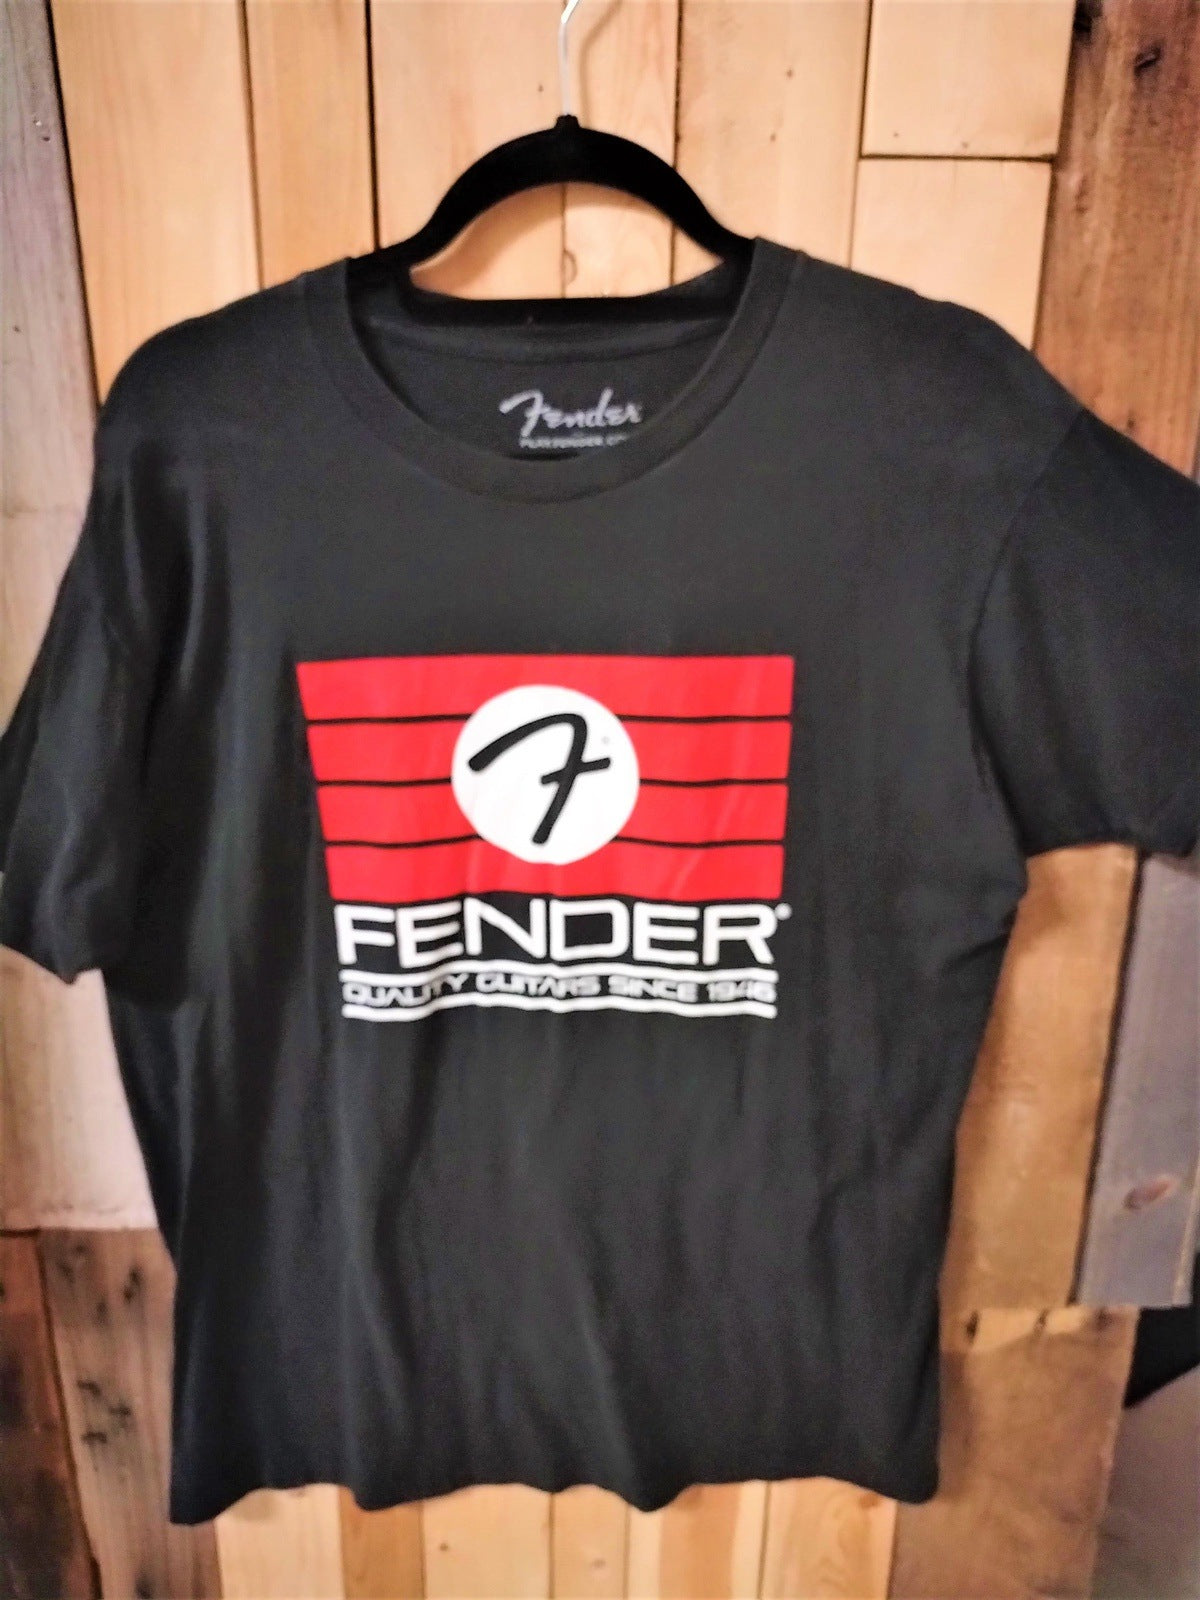 Fender Official Merchandise "Quality Guitars Since 1946" T Shirt Size Large